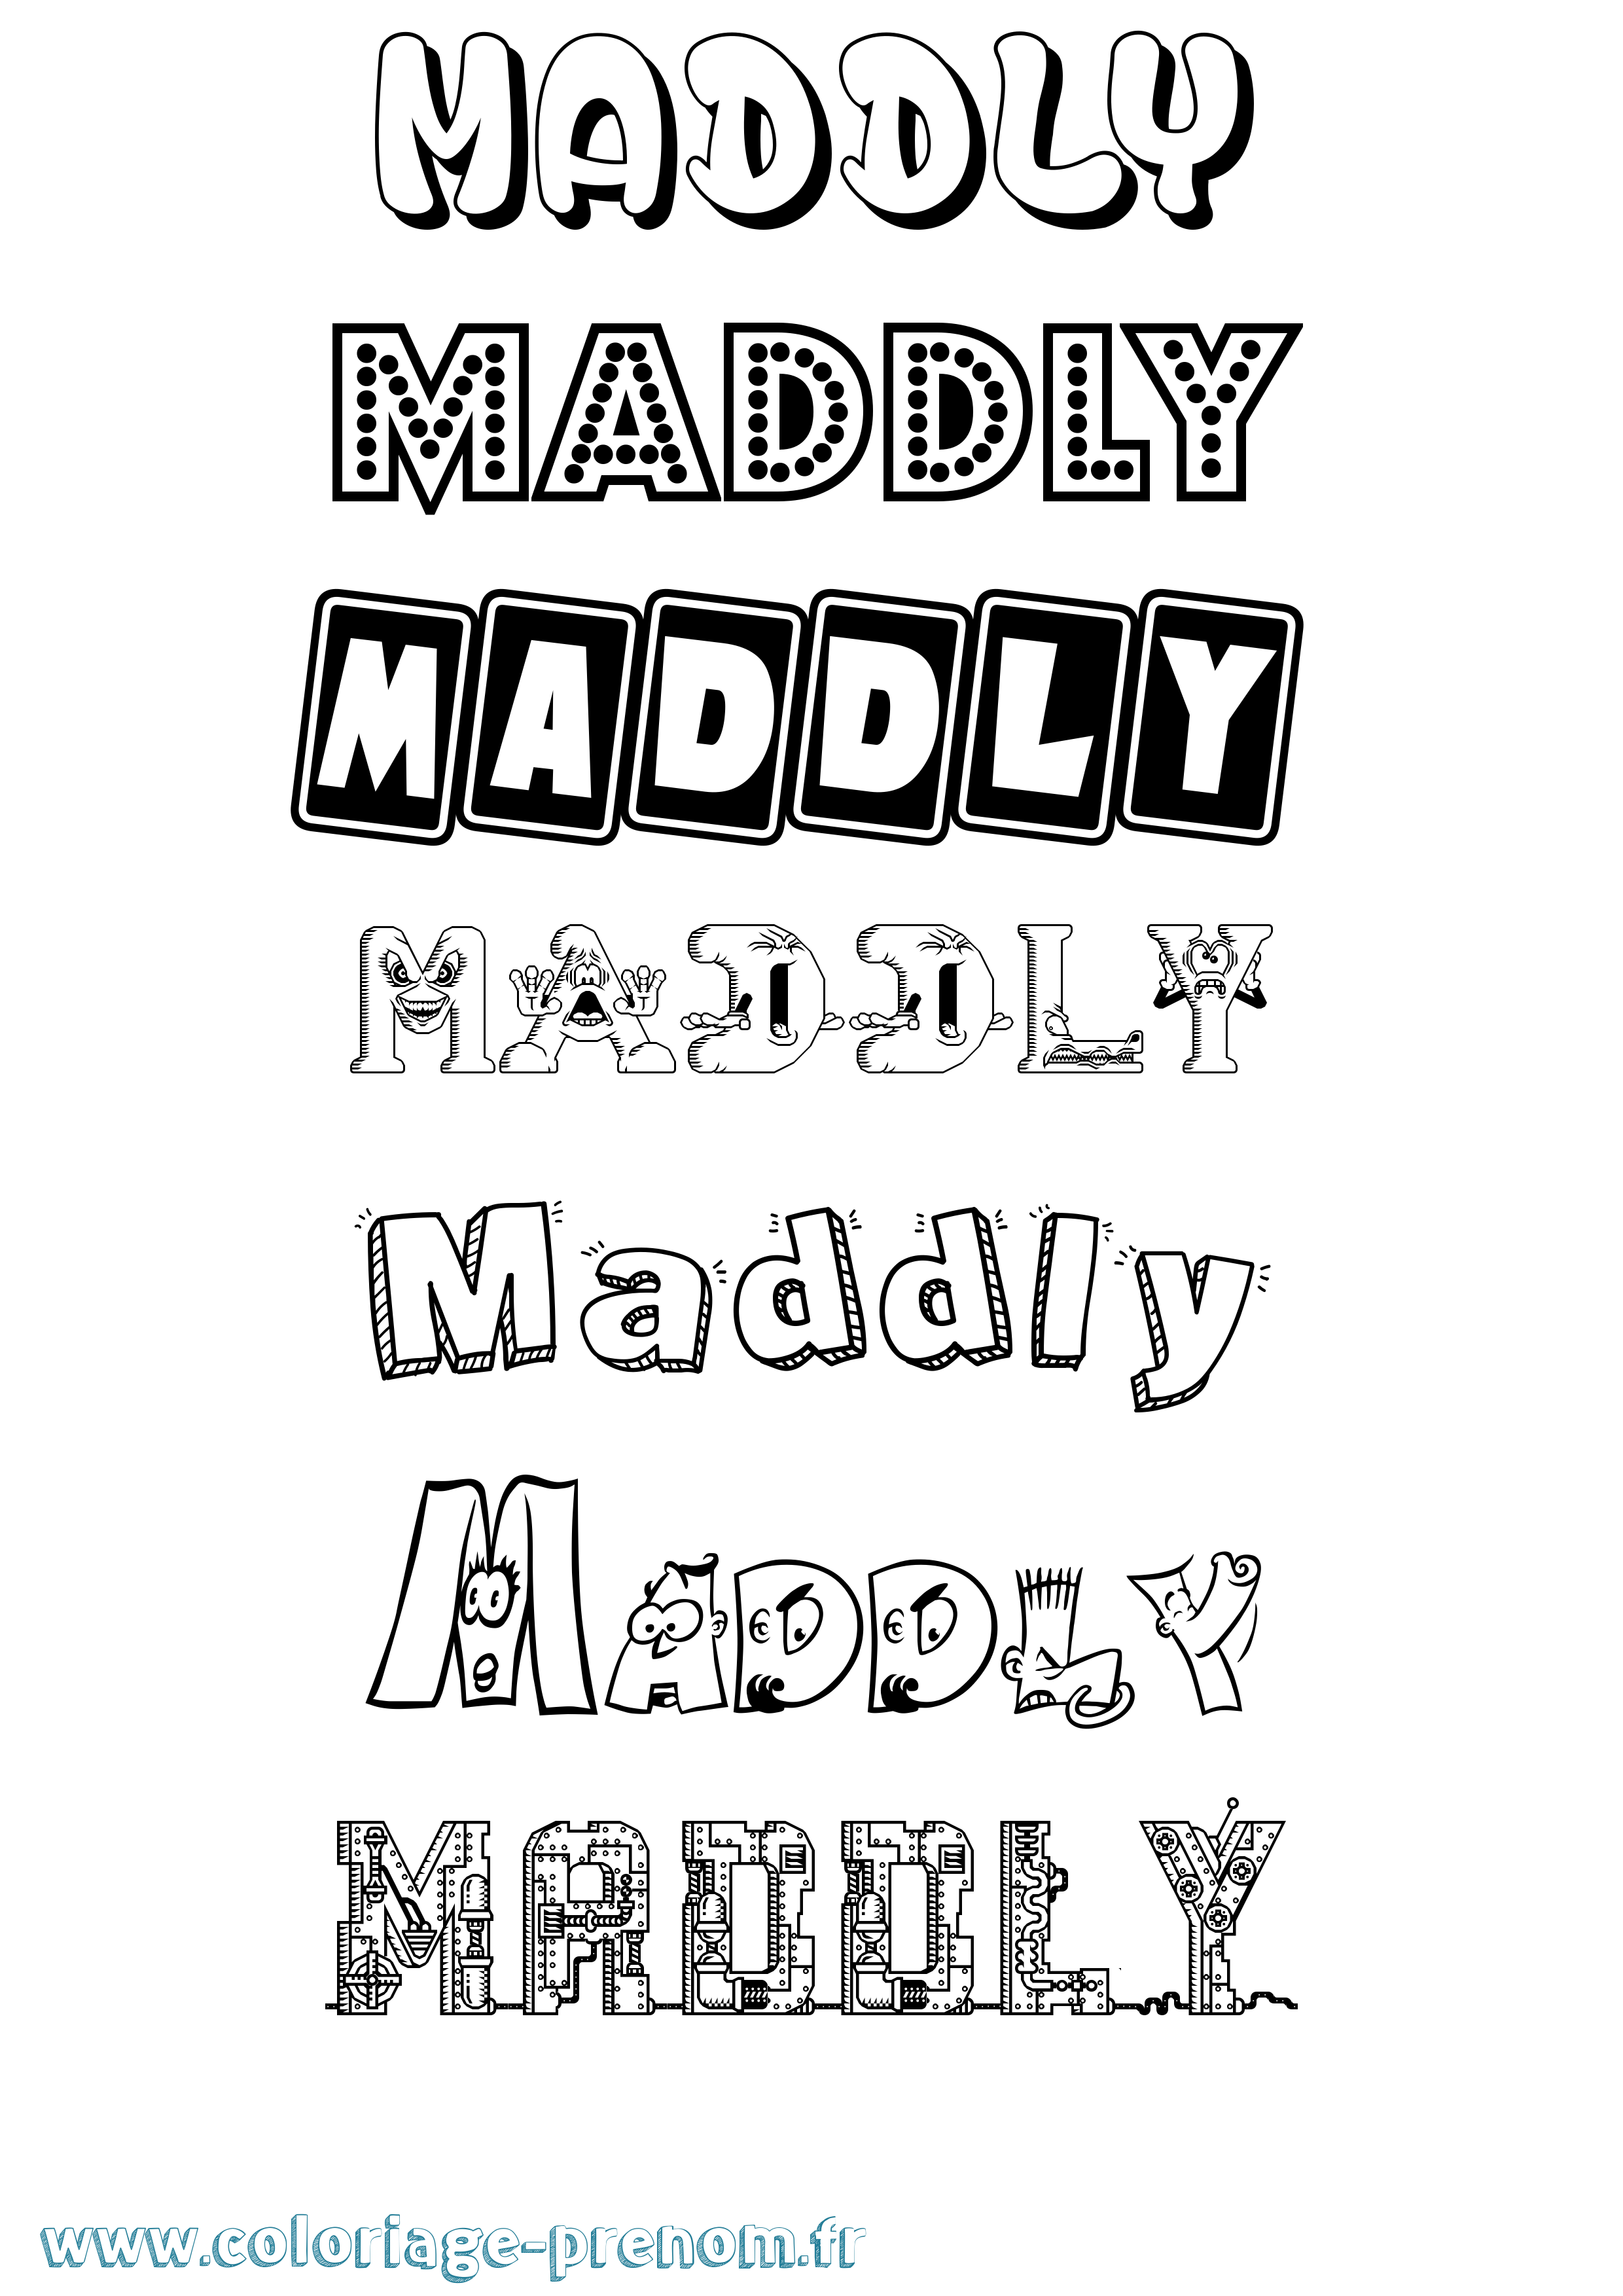 Coloriage prénom Maddly Fun